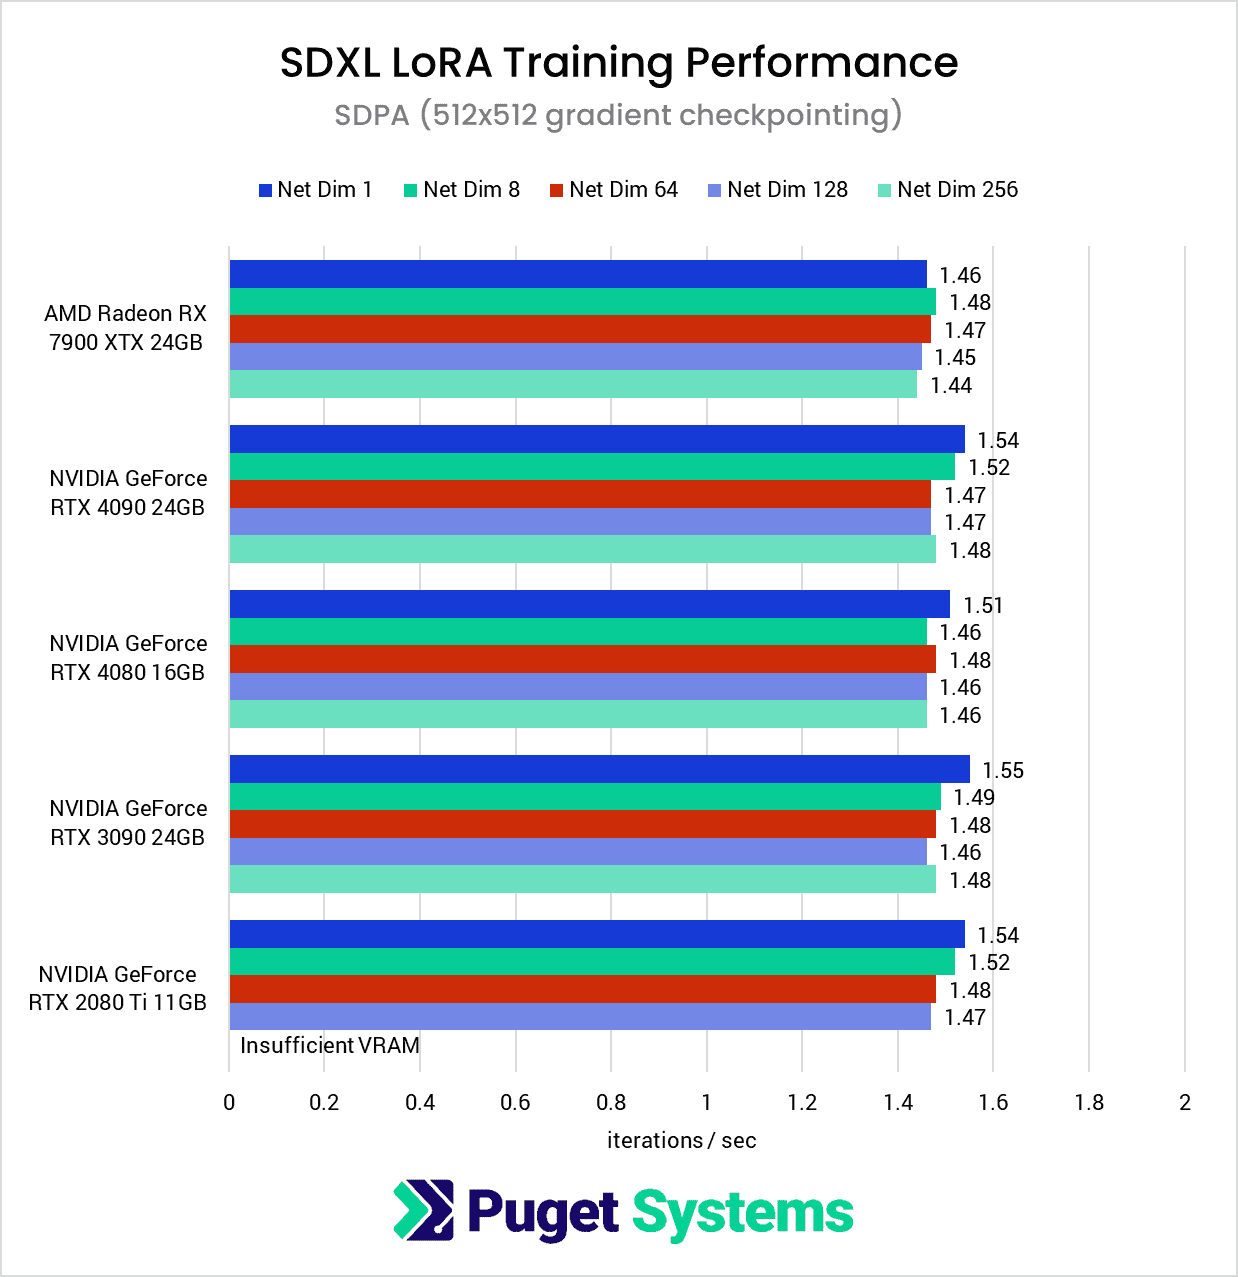 SDXL LoRA Training Performance - SDPA 512 gradient